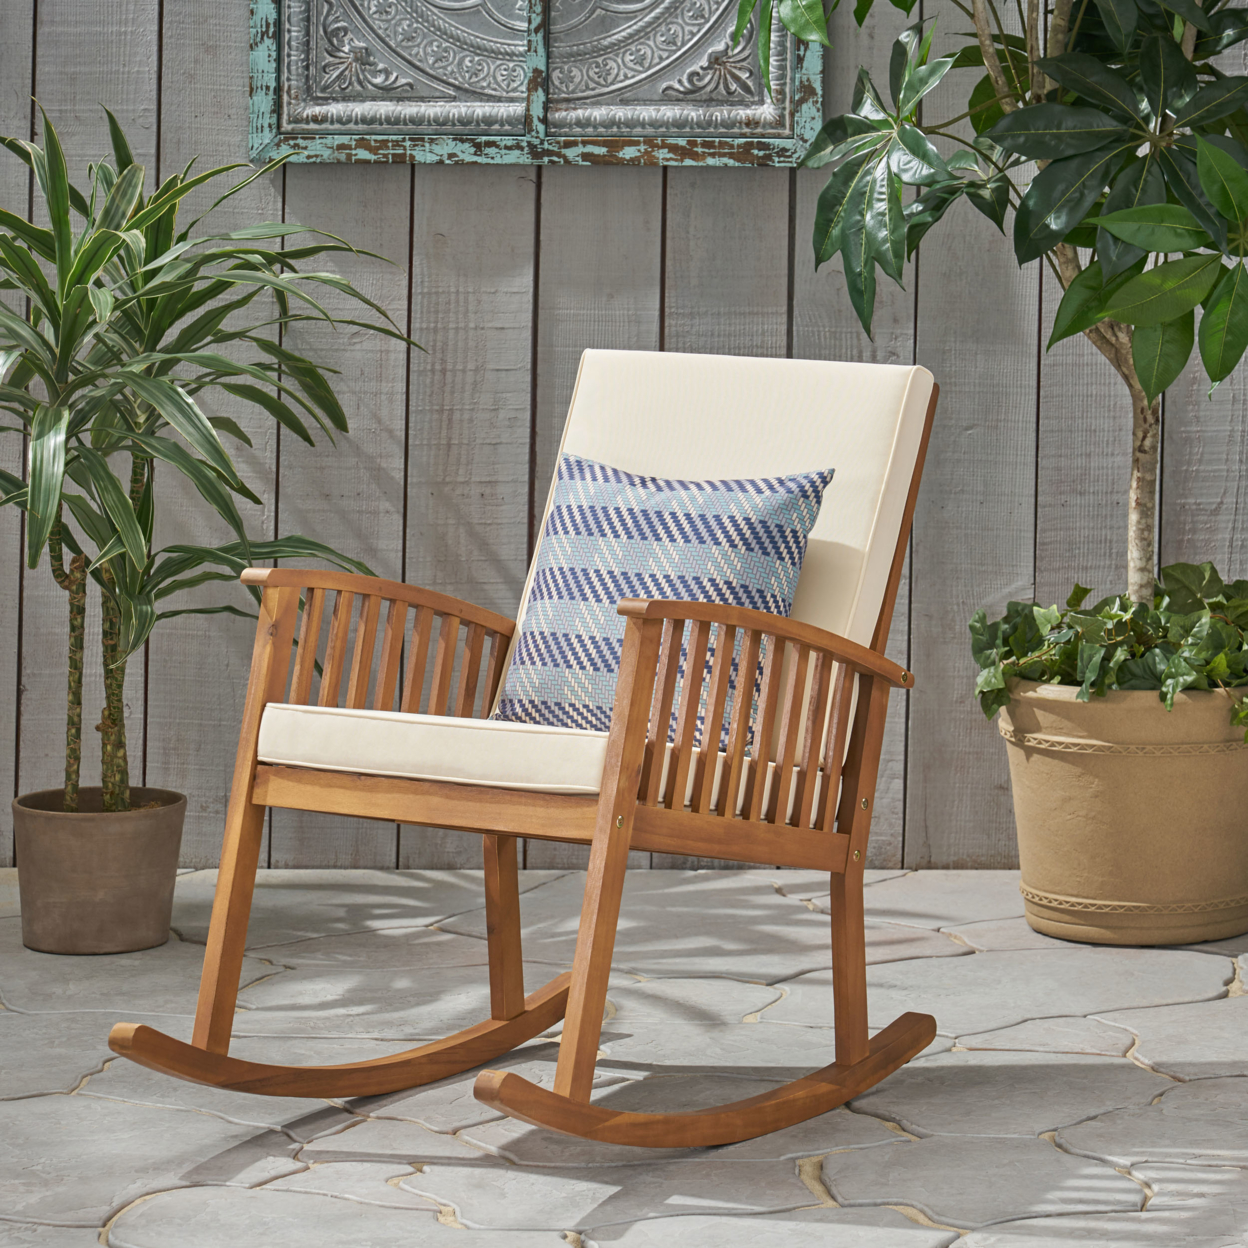 Beulah Outdoor Acacia Wood Rocking Chair - Light Gray Finish, Dark Gray